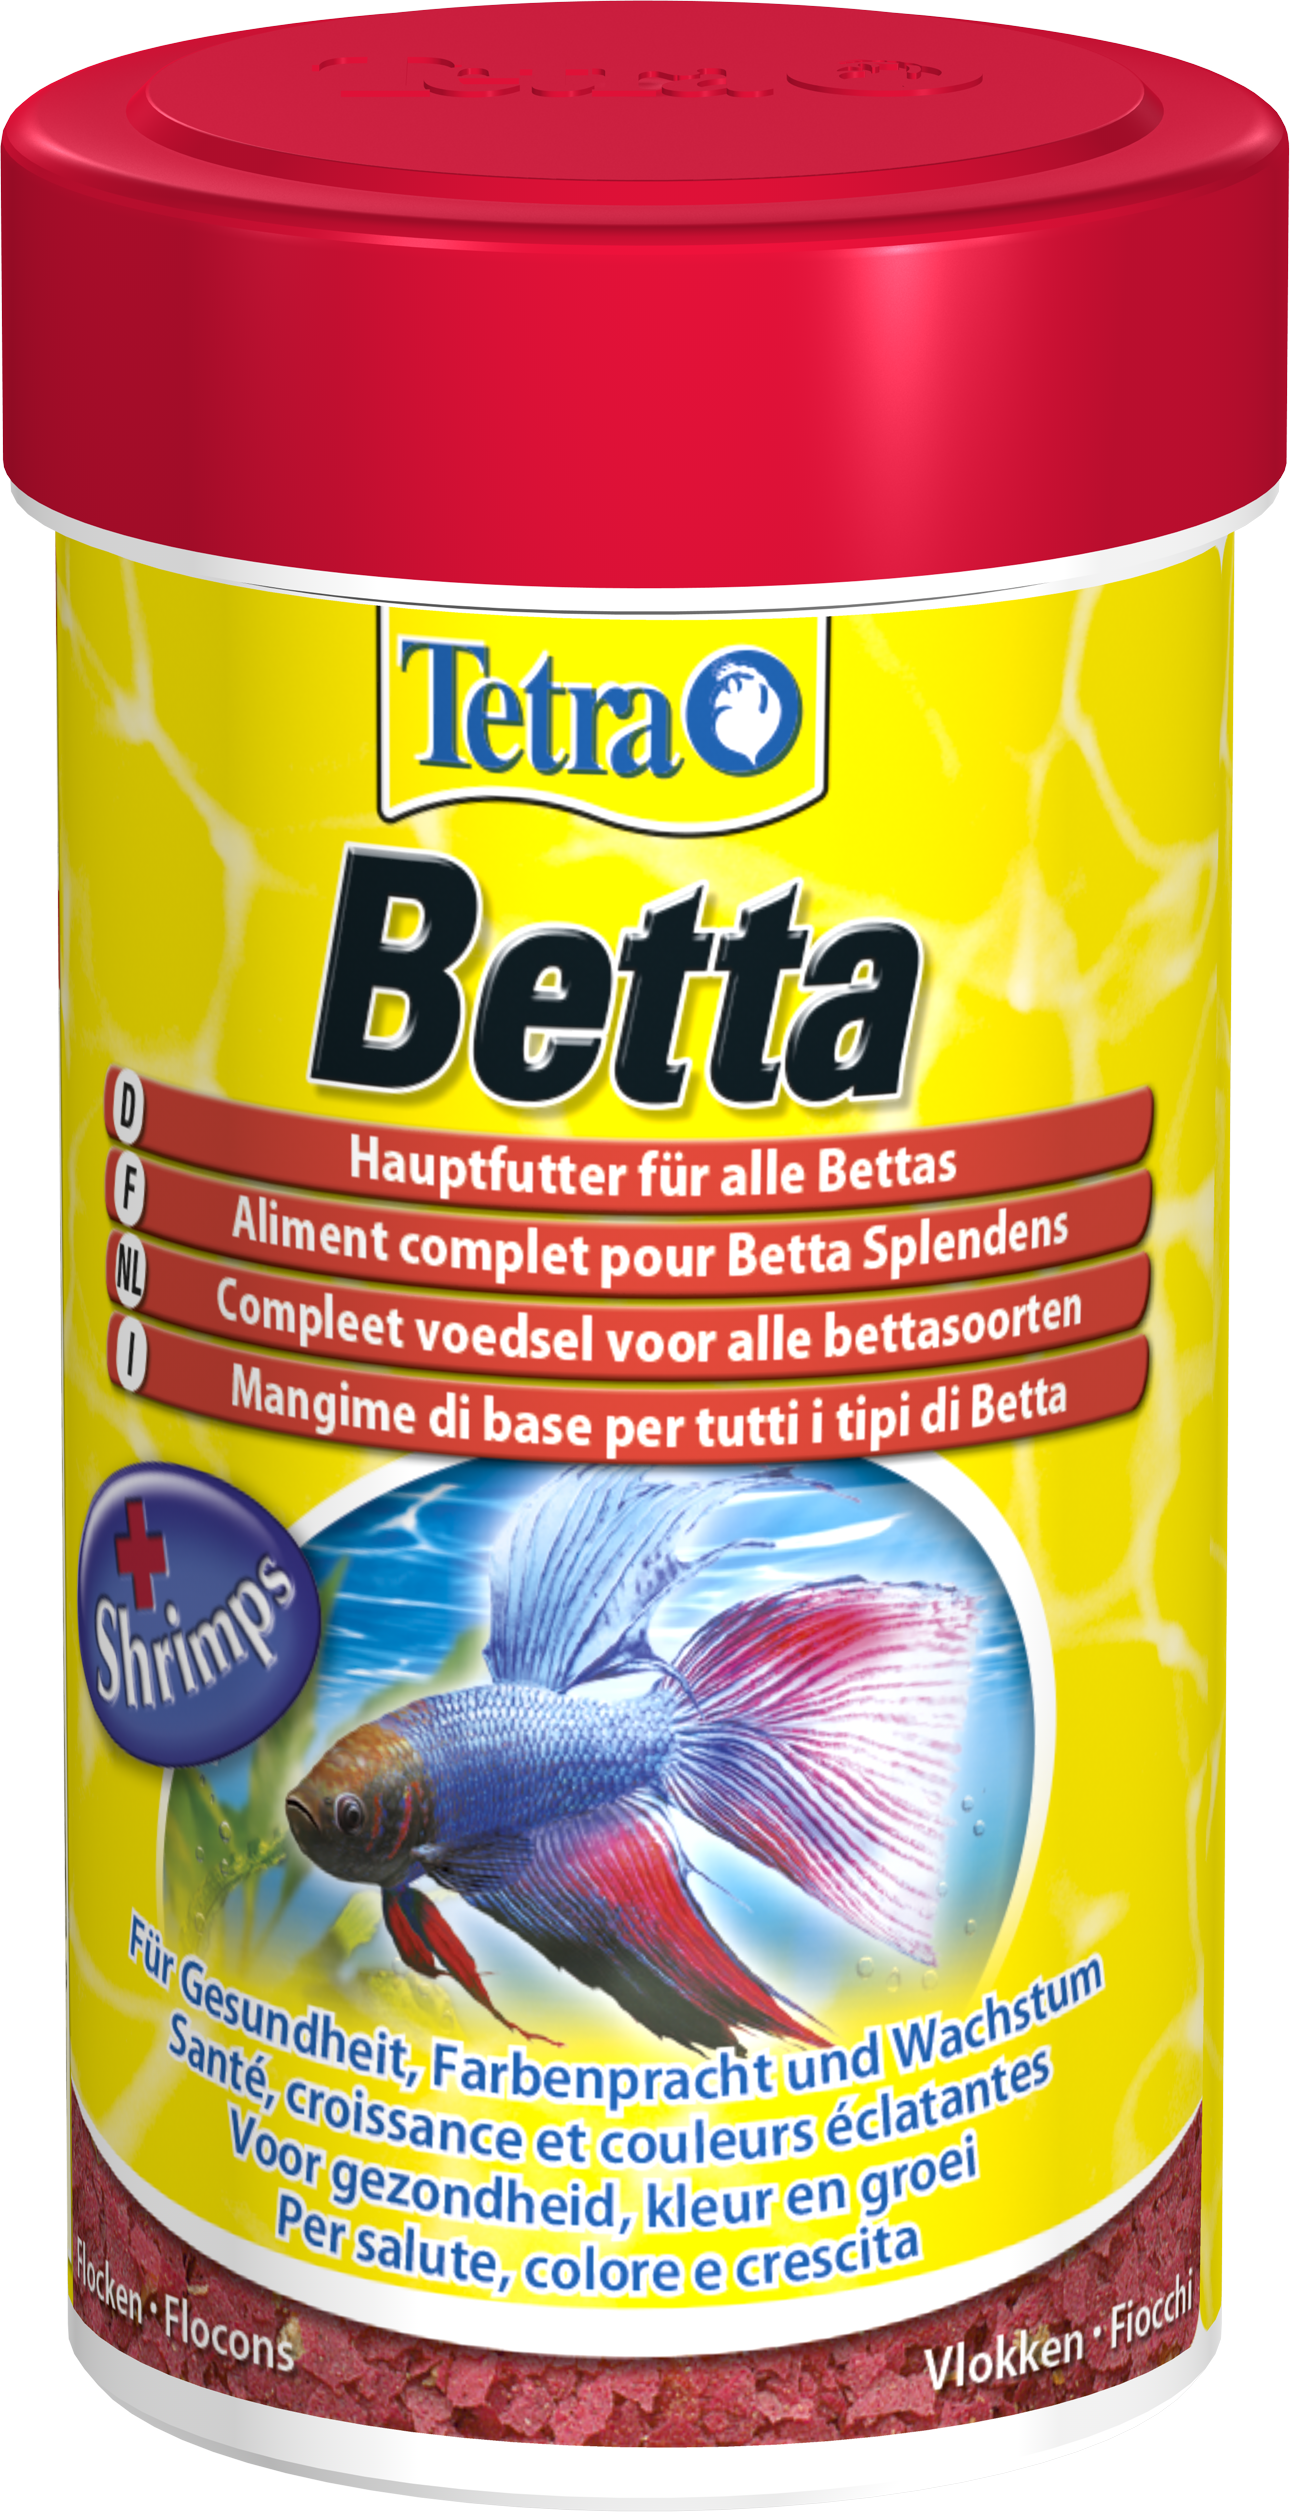 Tetra Betta: Tetra